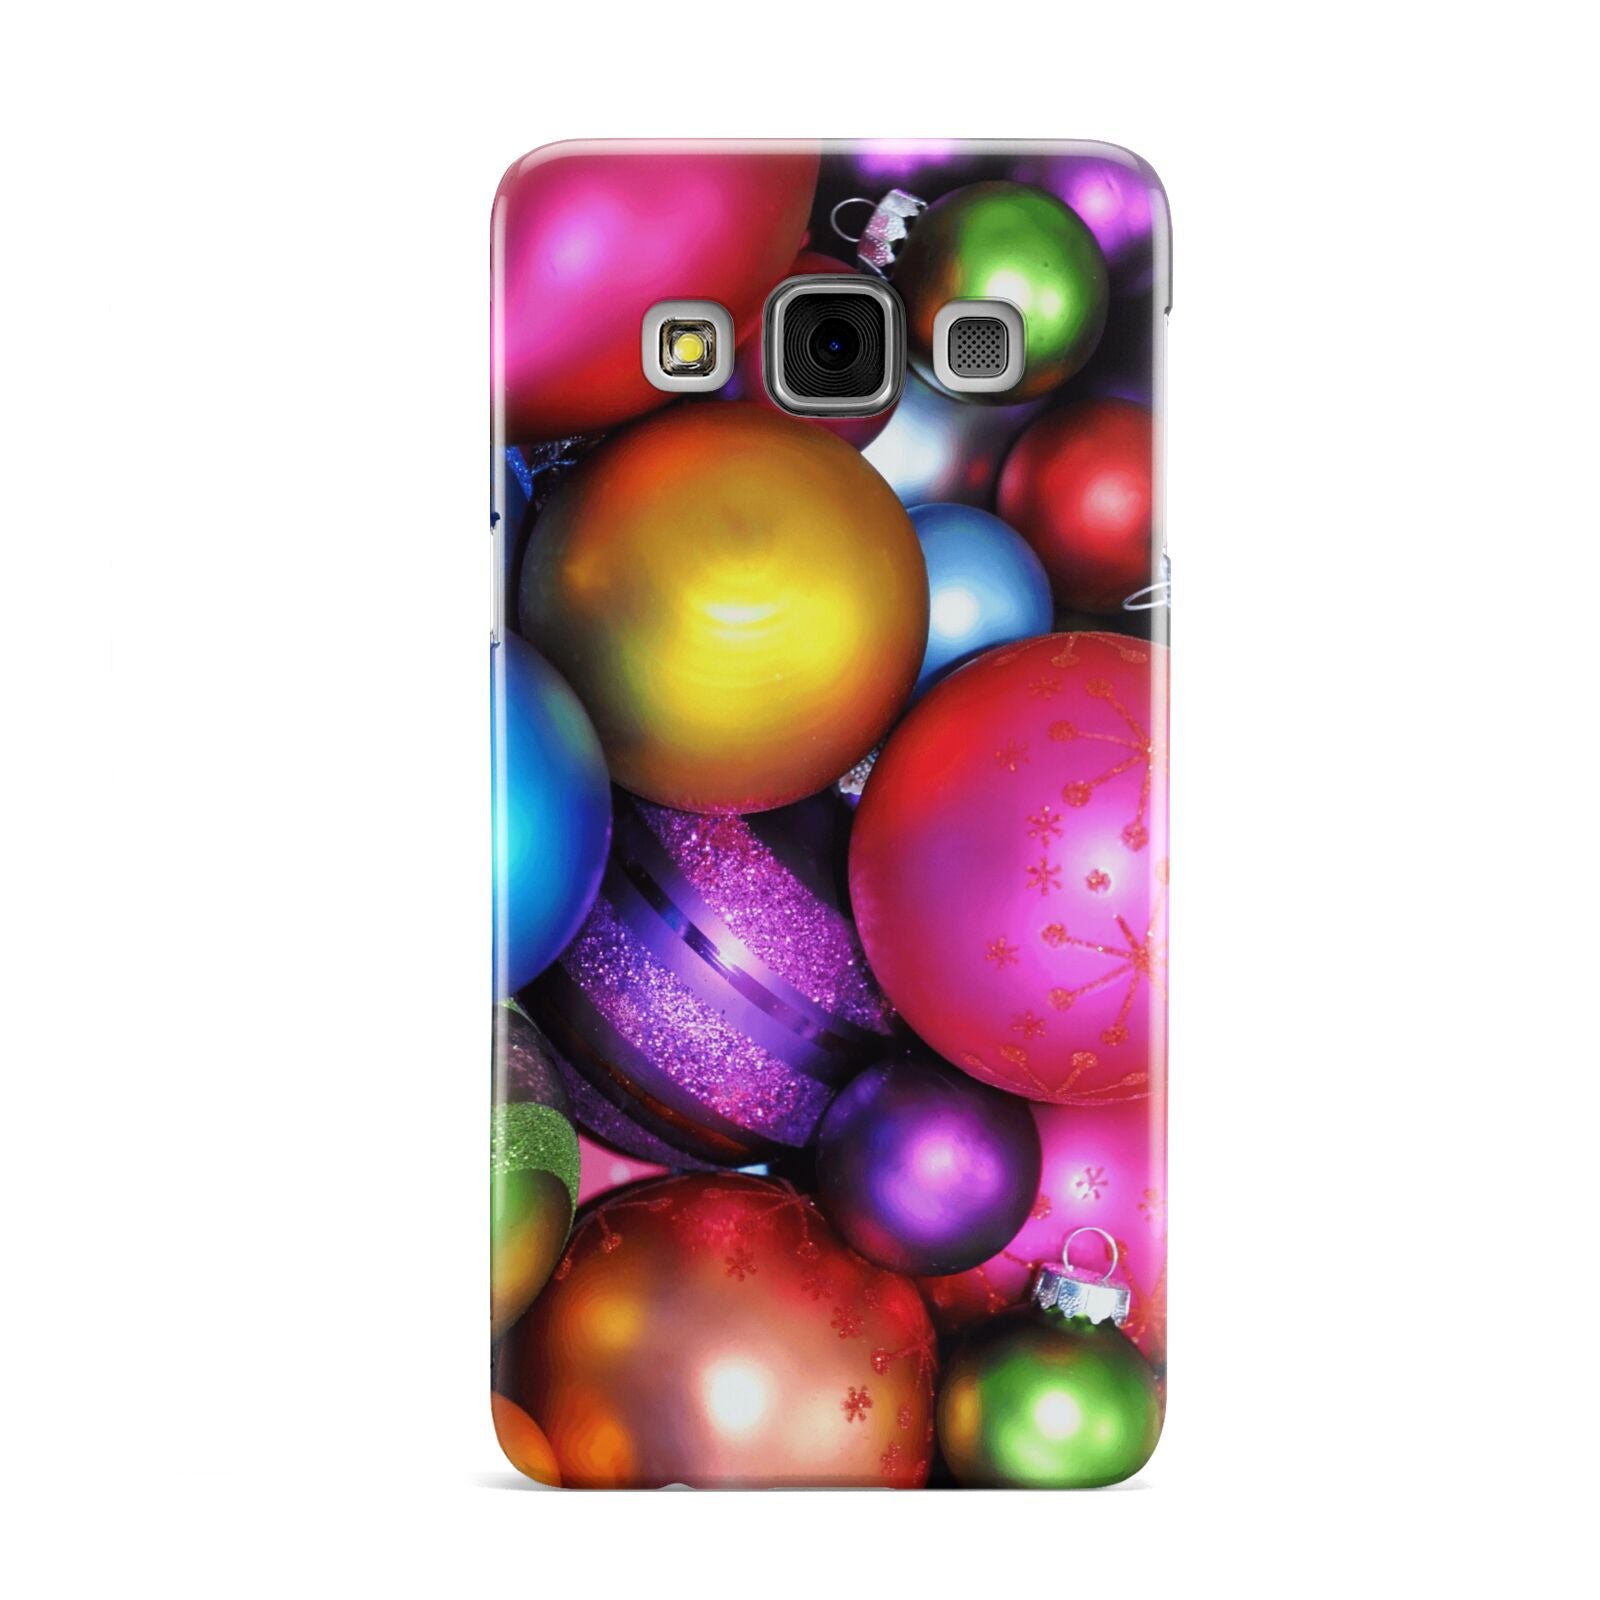 Bauble Samsung Galaxy A3 Case